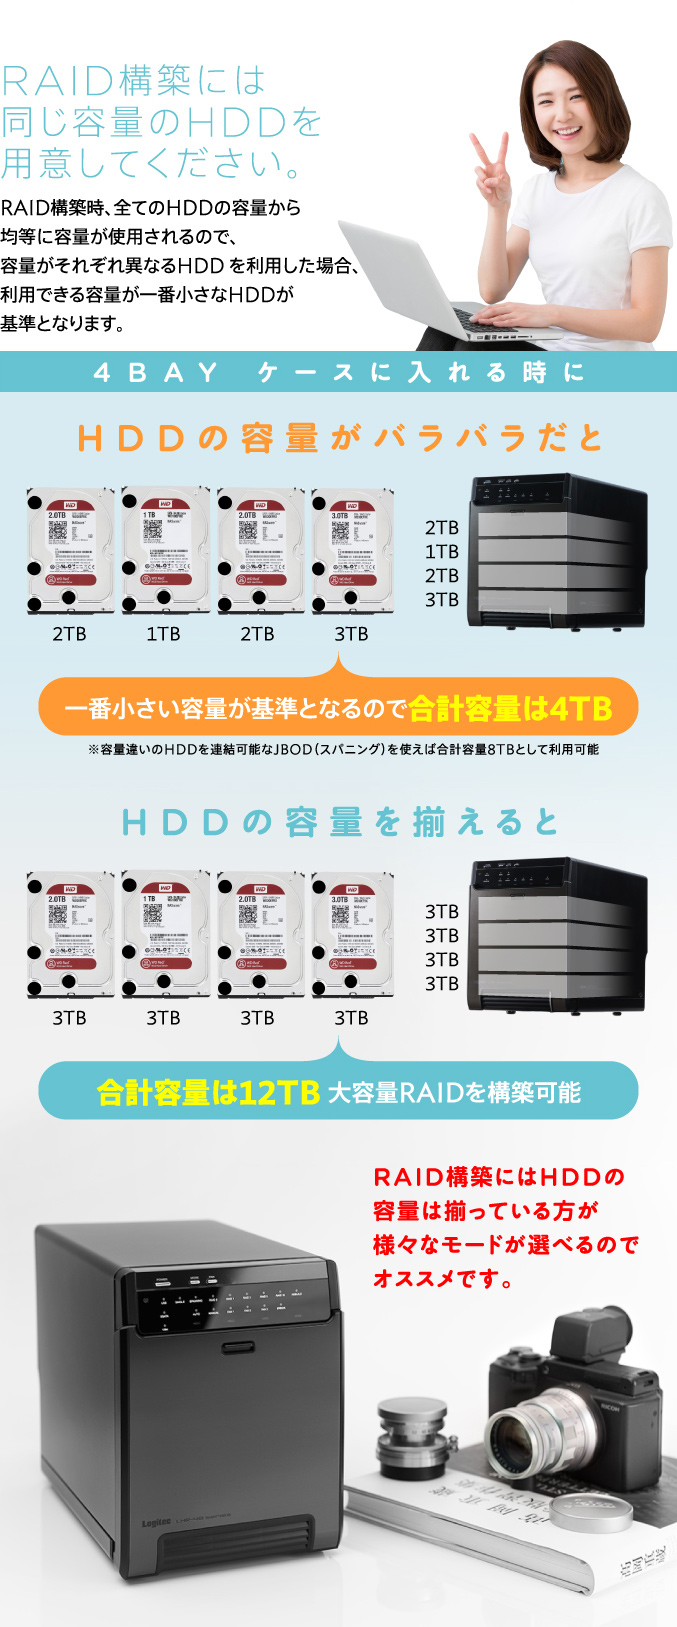 RAID構築には同じ容量のHDDを用意